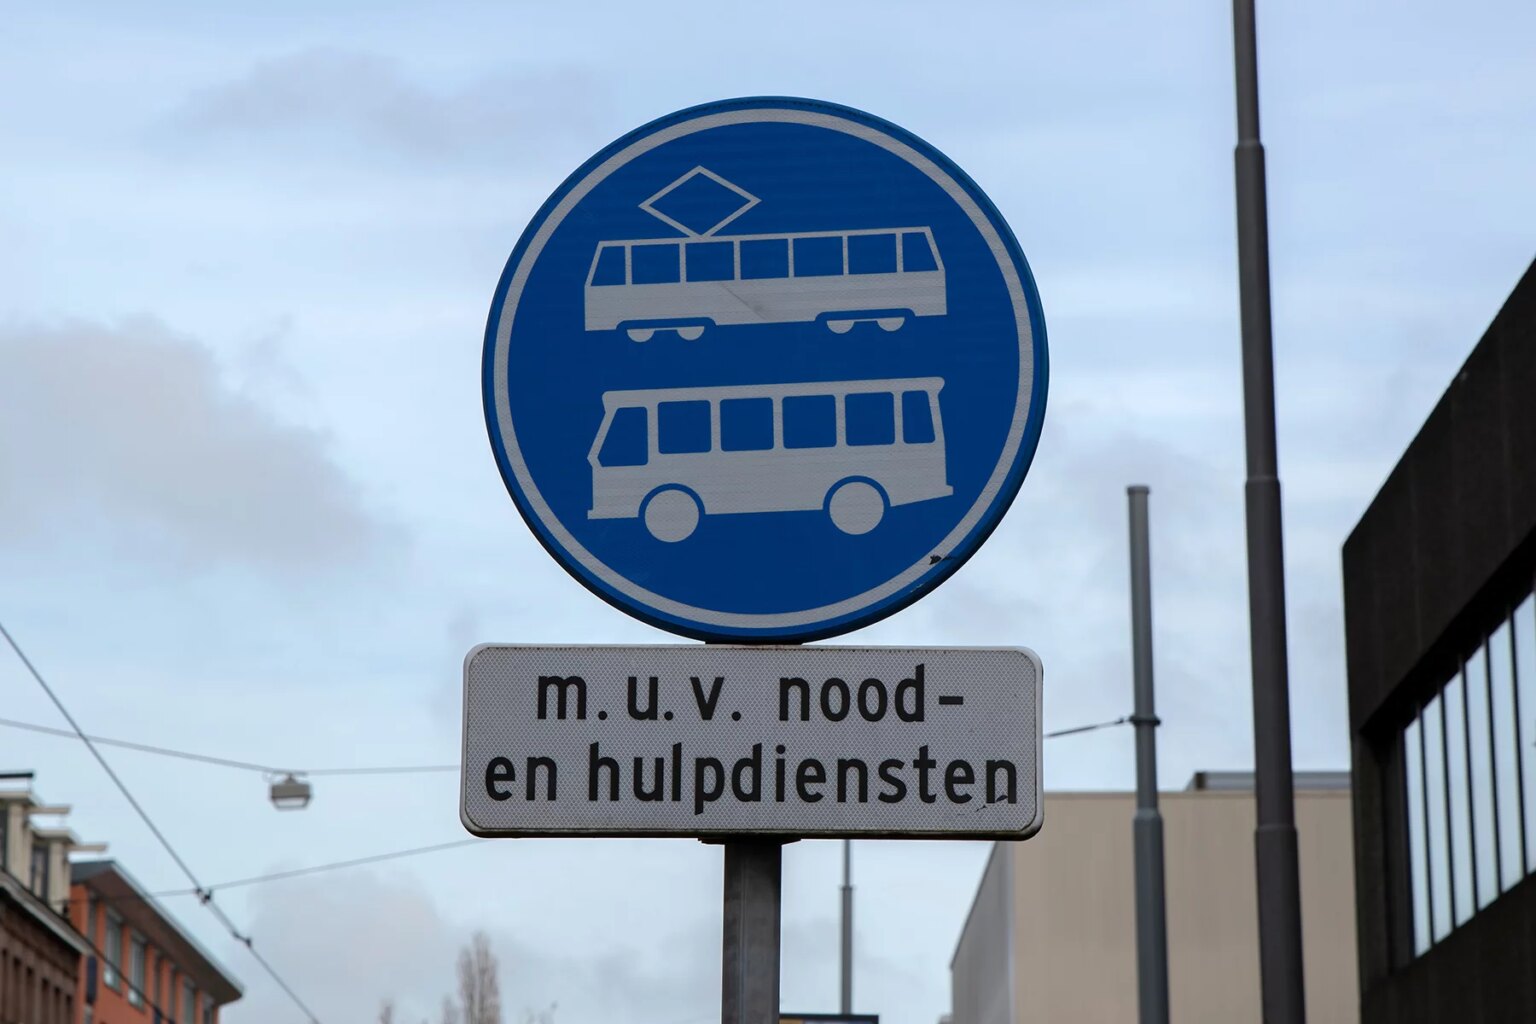 Dutch abbreviation